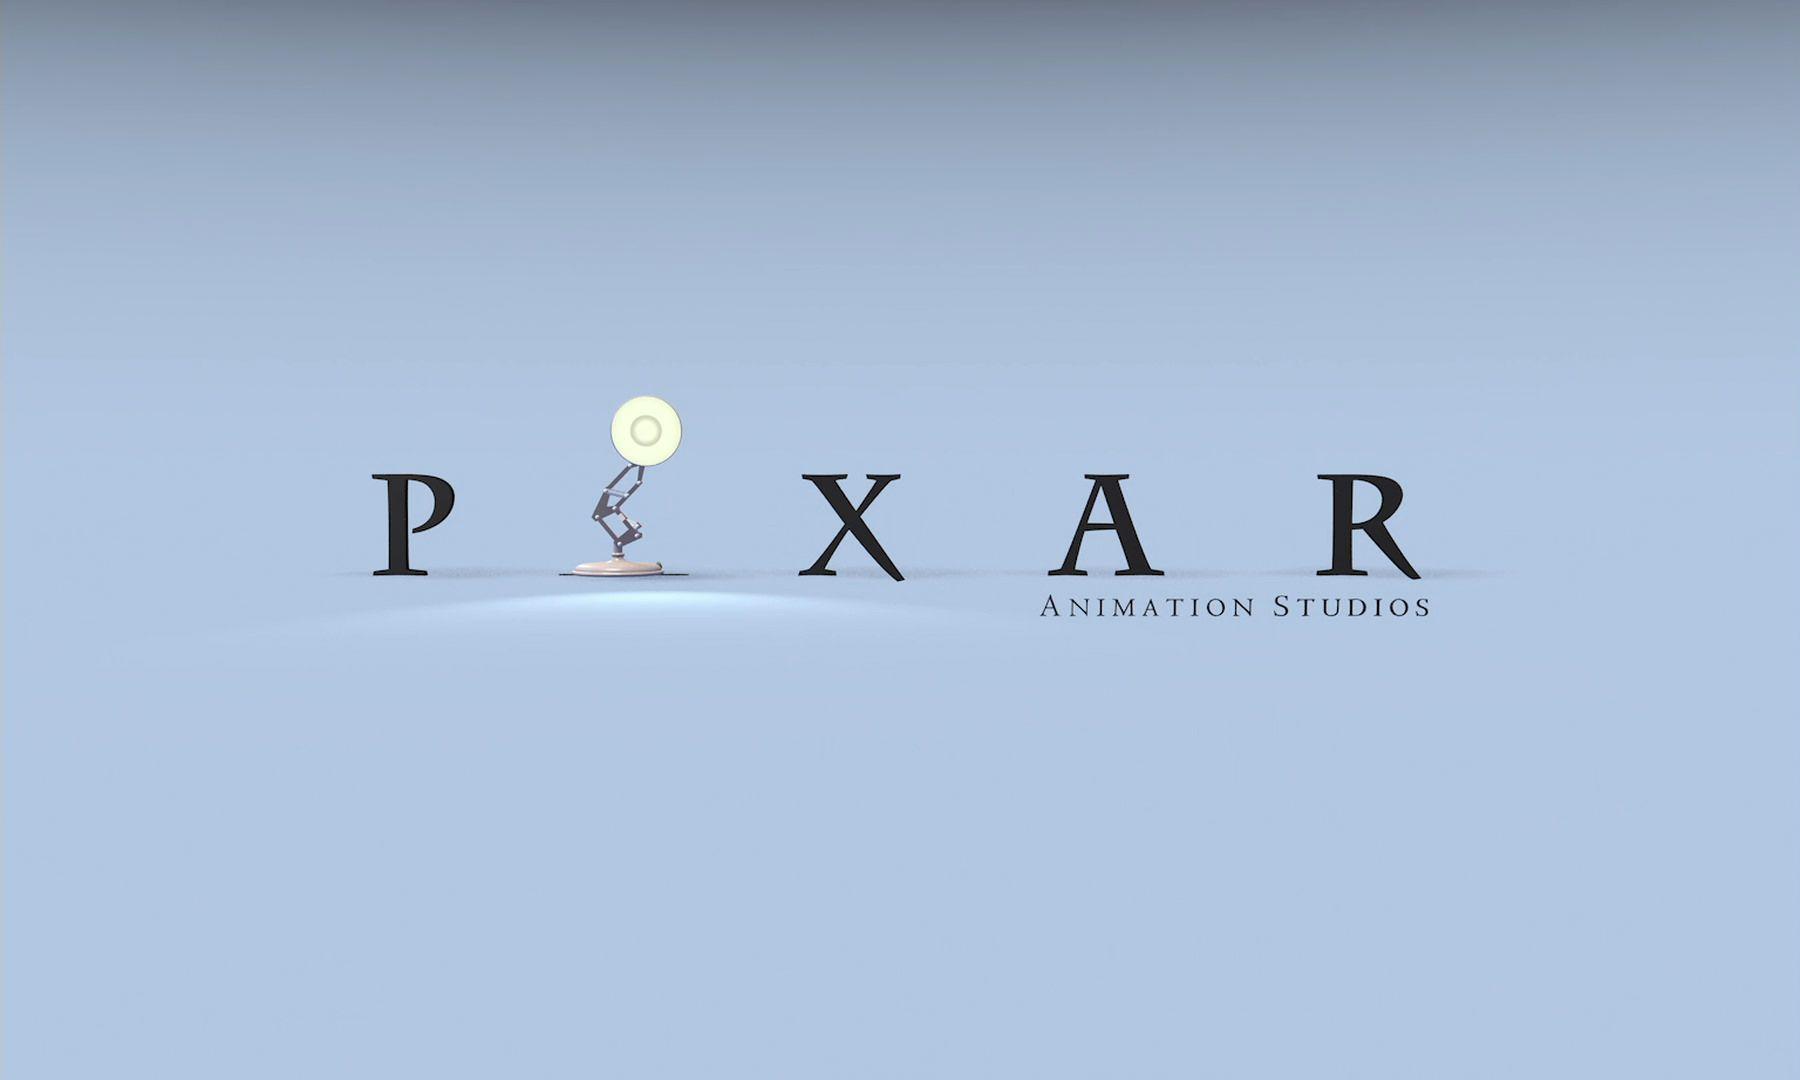 Pixar logo